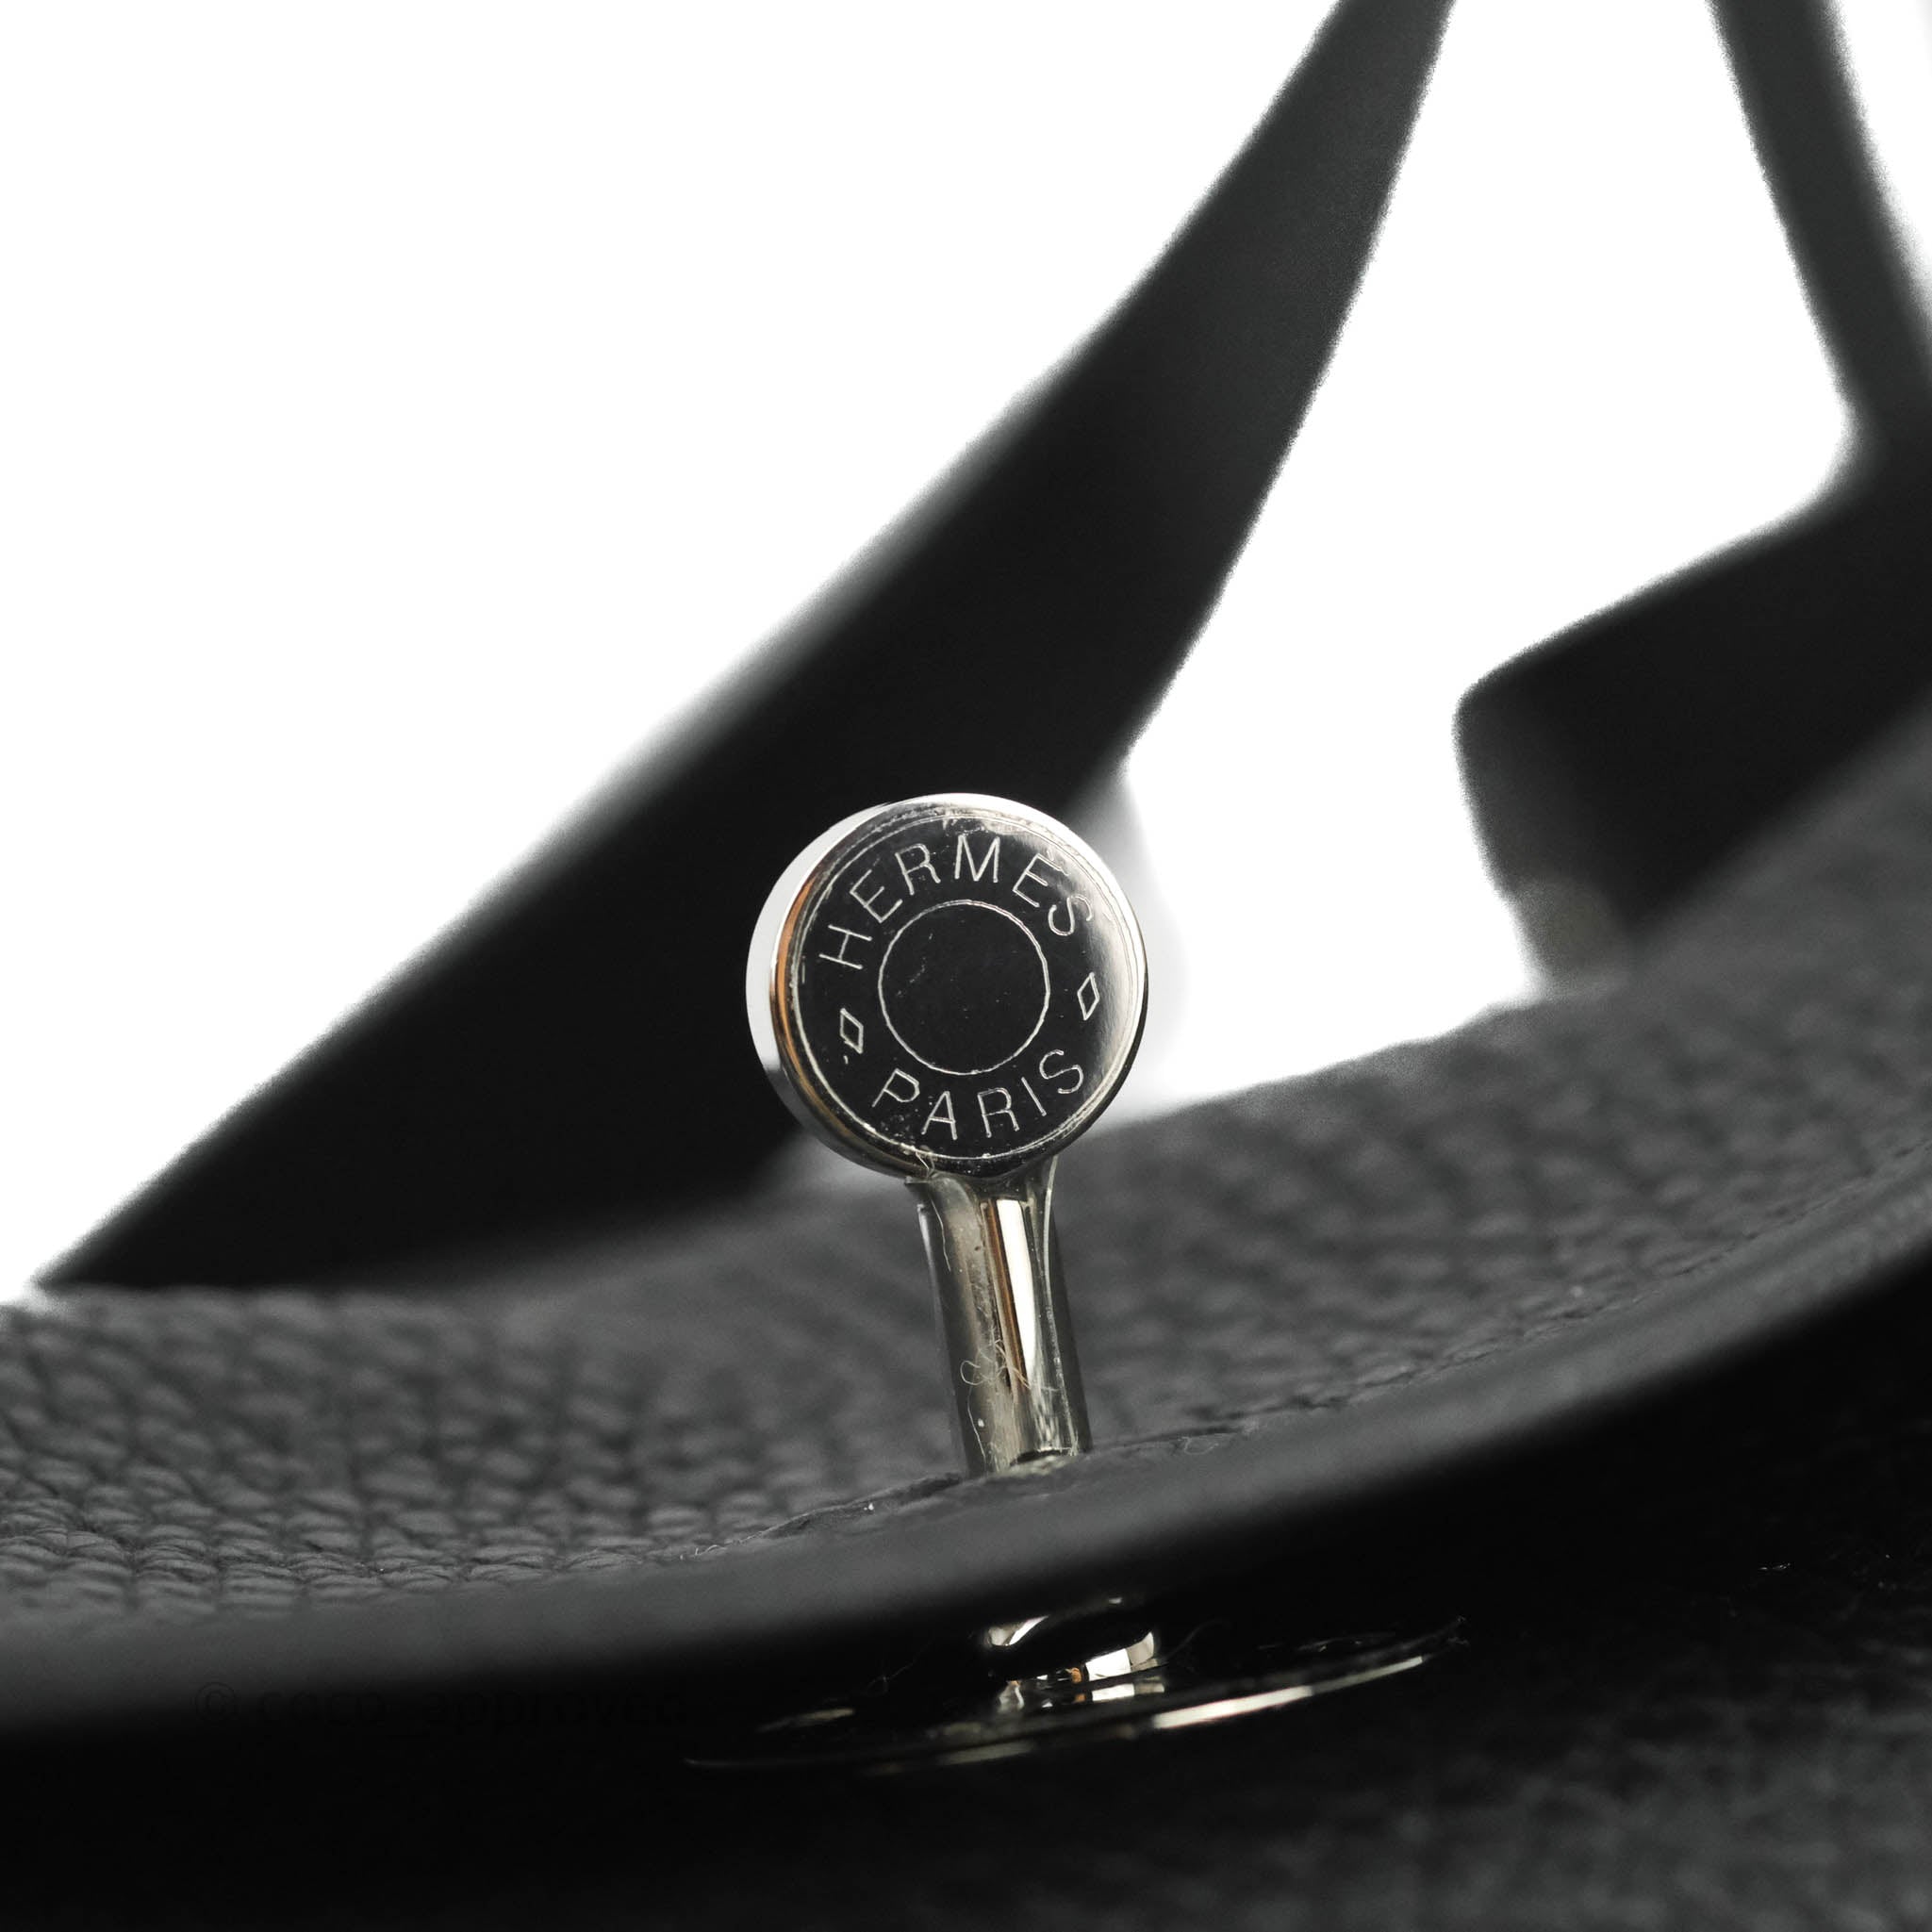 Hermes Lindy 26 Black Clemence Palladium Hardware – Madison Avenue Couture